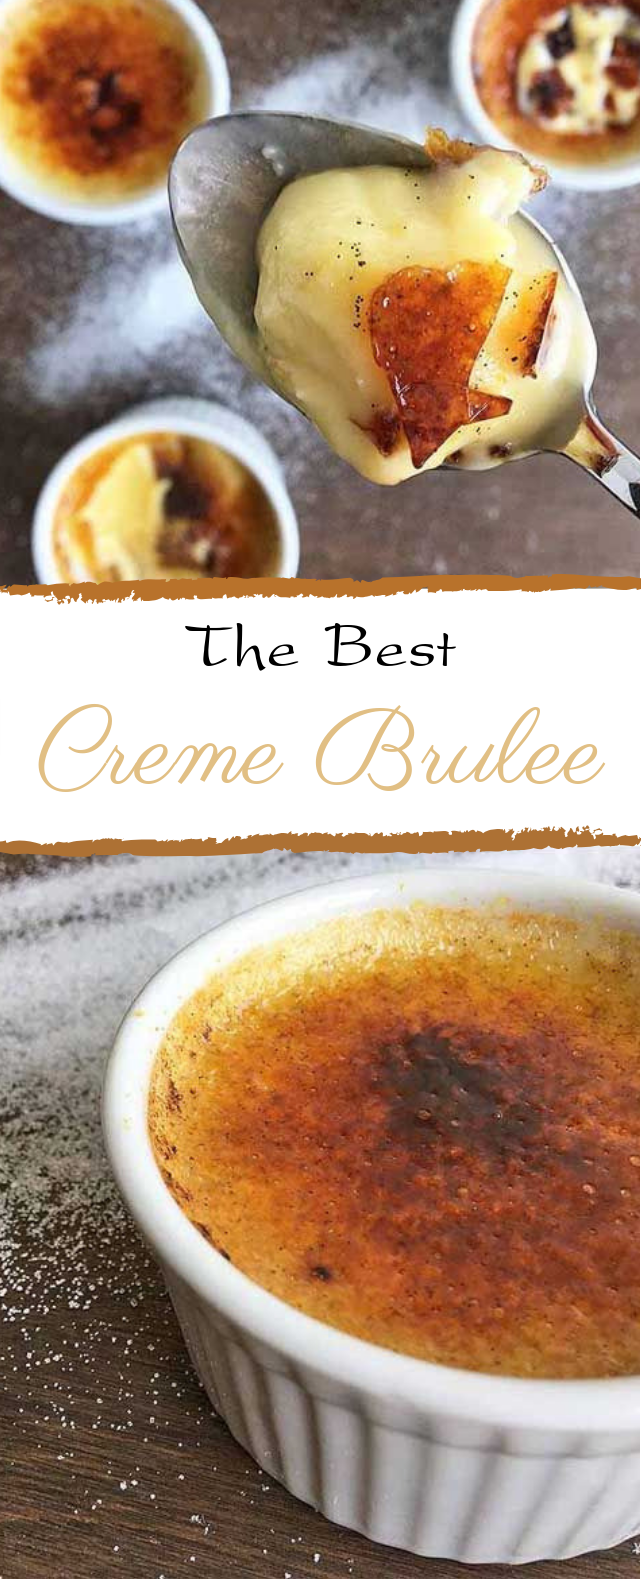 The Best Creme Brulee #bestrecipe #desserts